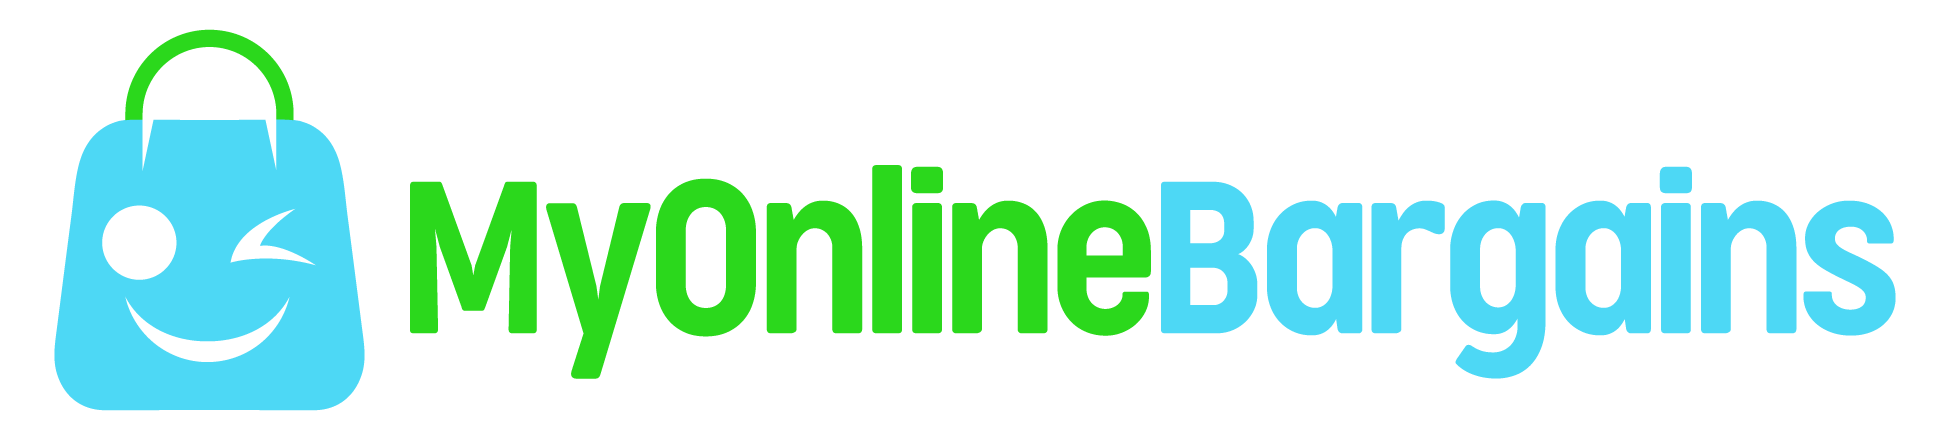 My Online Bargains Logo